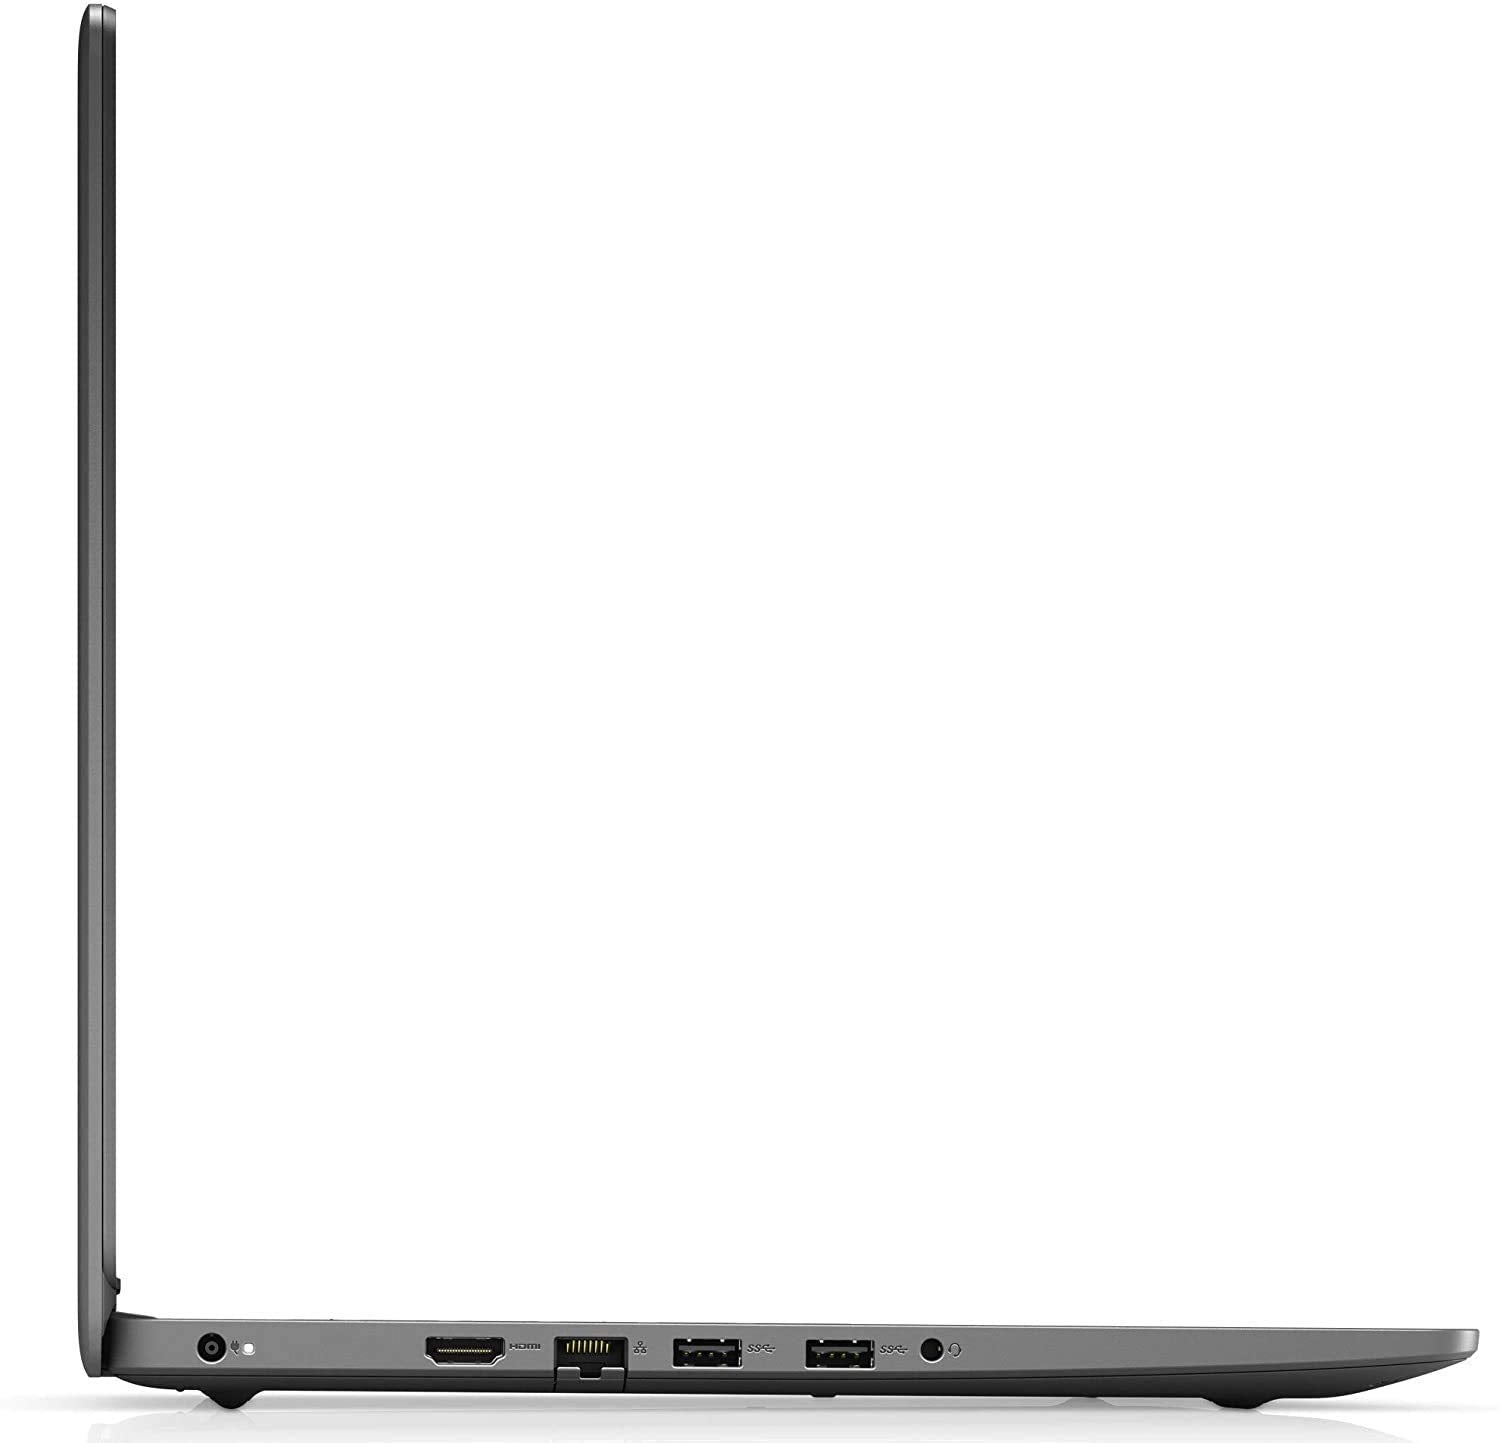 Dell Laptop Inspiron 3501, Intel Core i5, 11th Gen, 8GB Ram, 1TB HDD